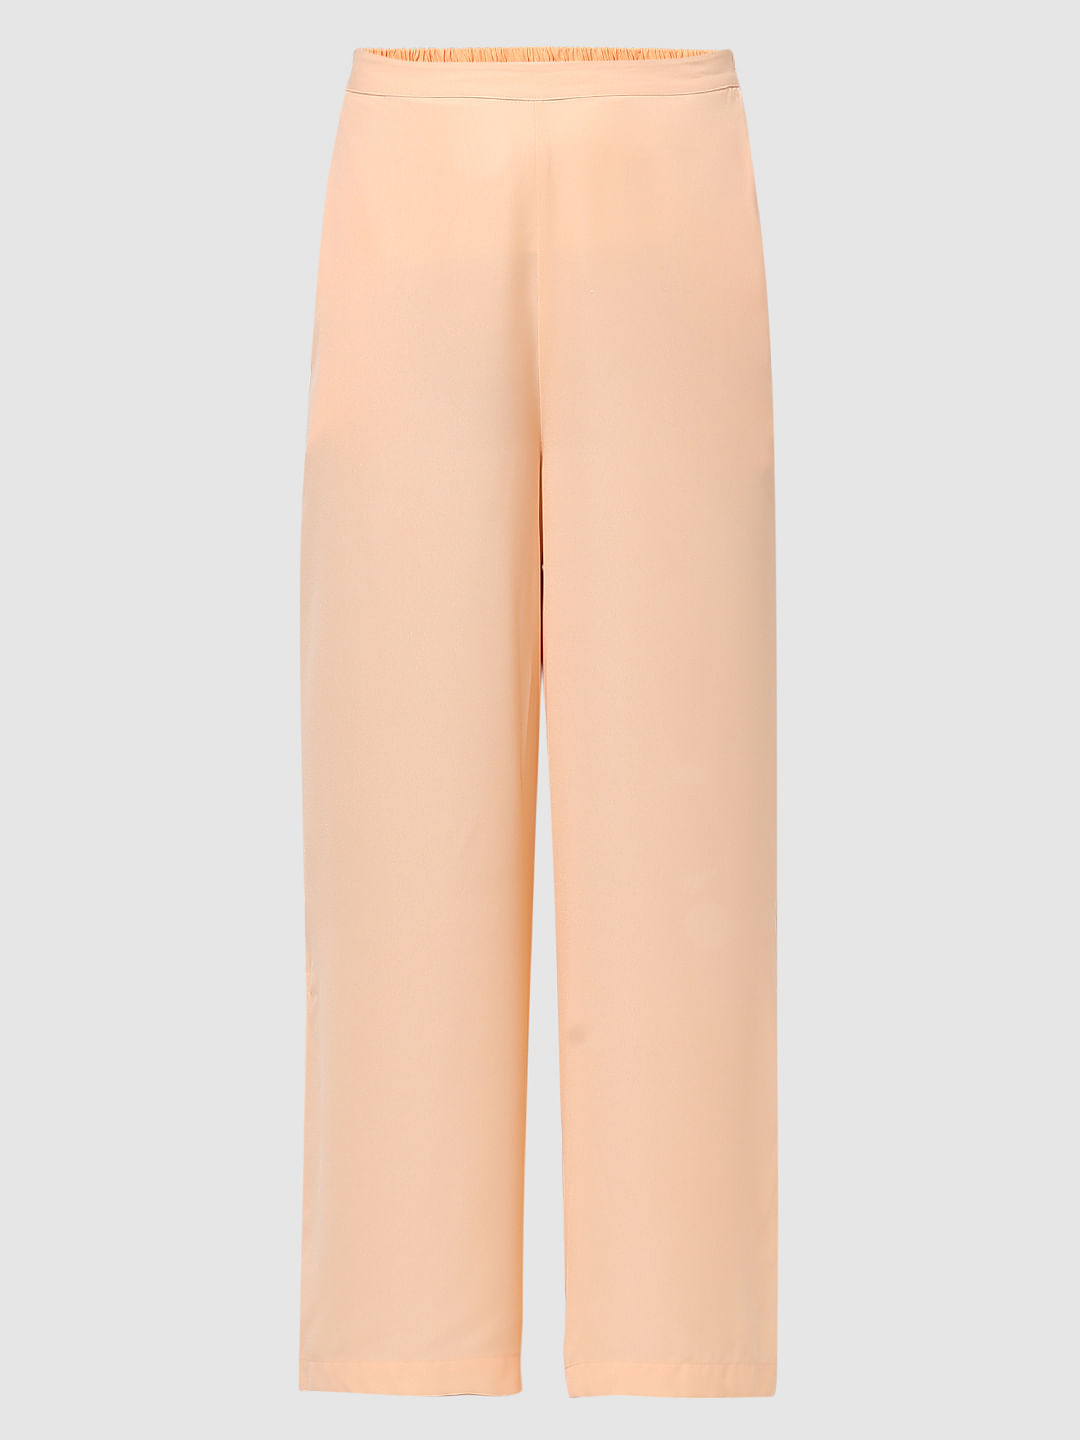 Petite Stone Peach Skin Straight Leg Trousers | PrettyLittleThing